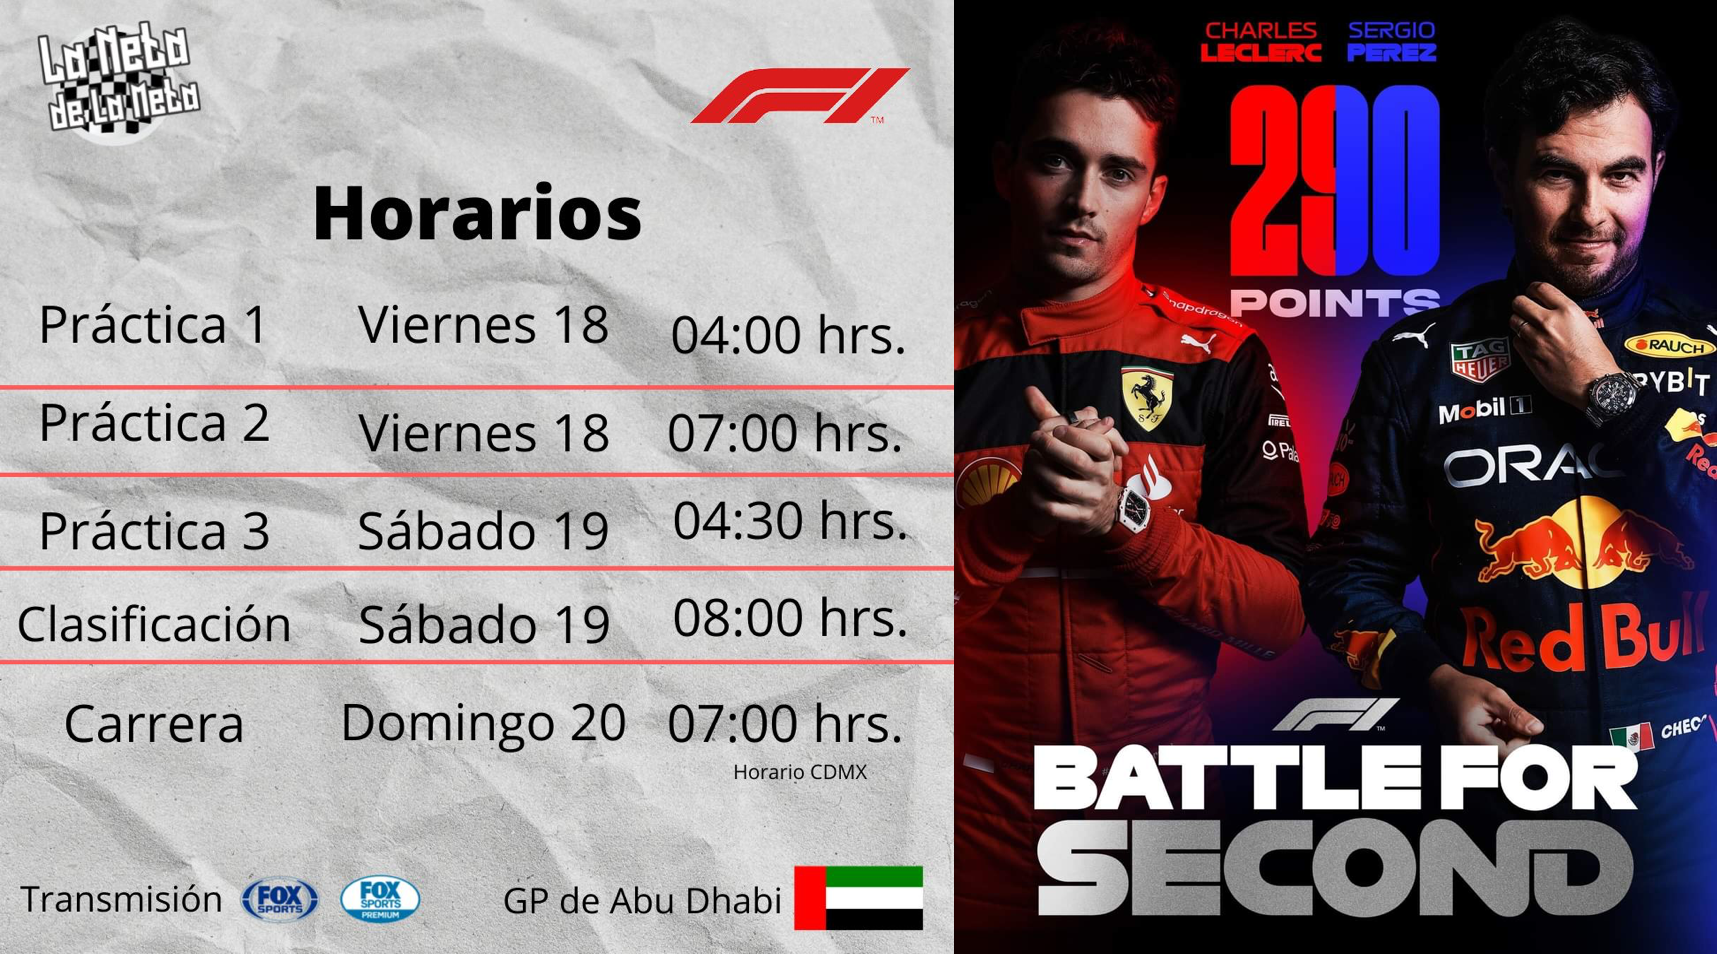 Duelo entre Checo Pérez y Leclerc en Abu Dhabi